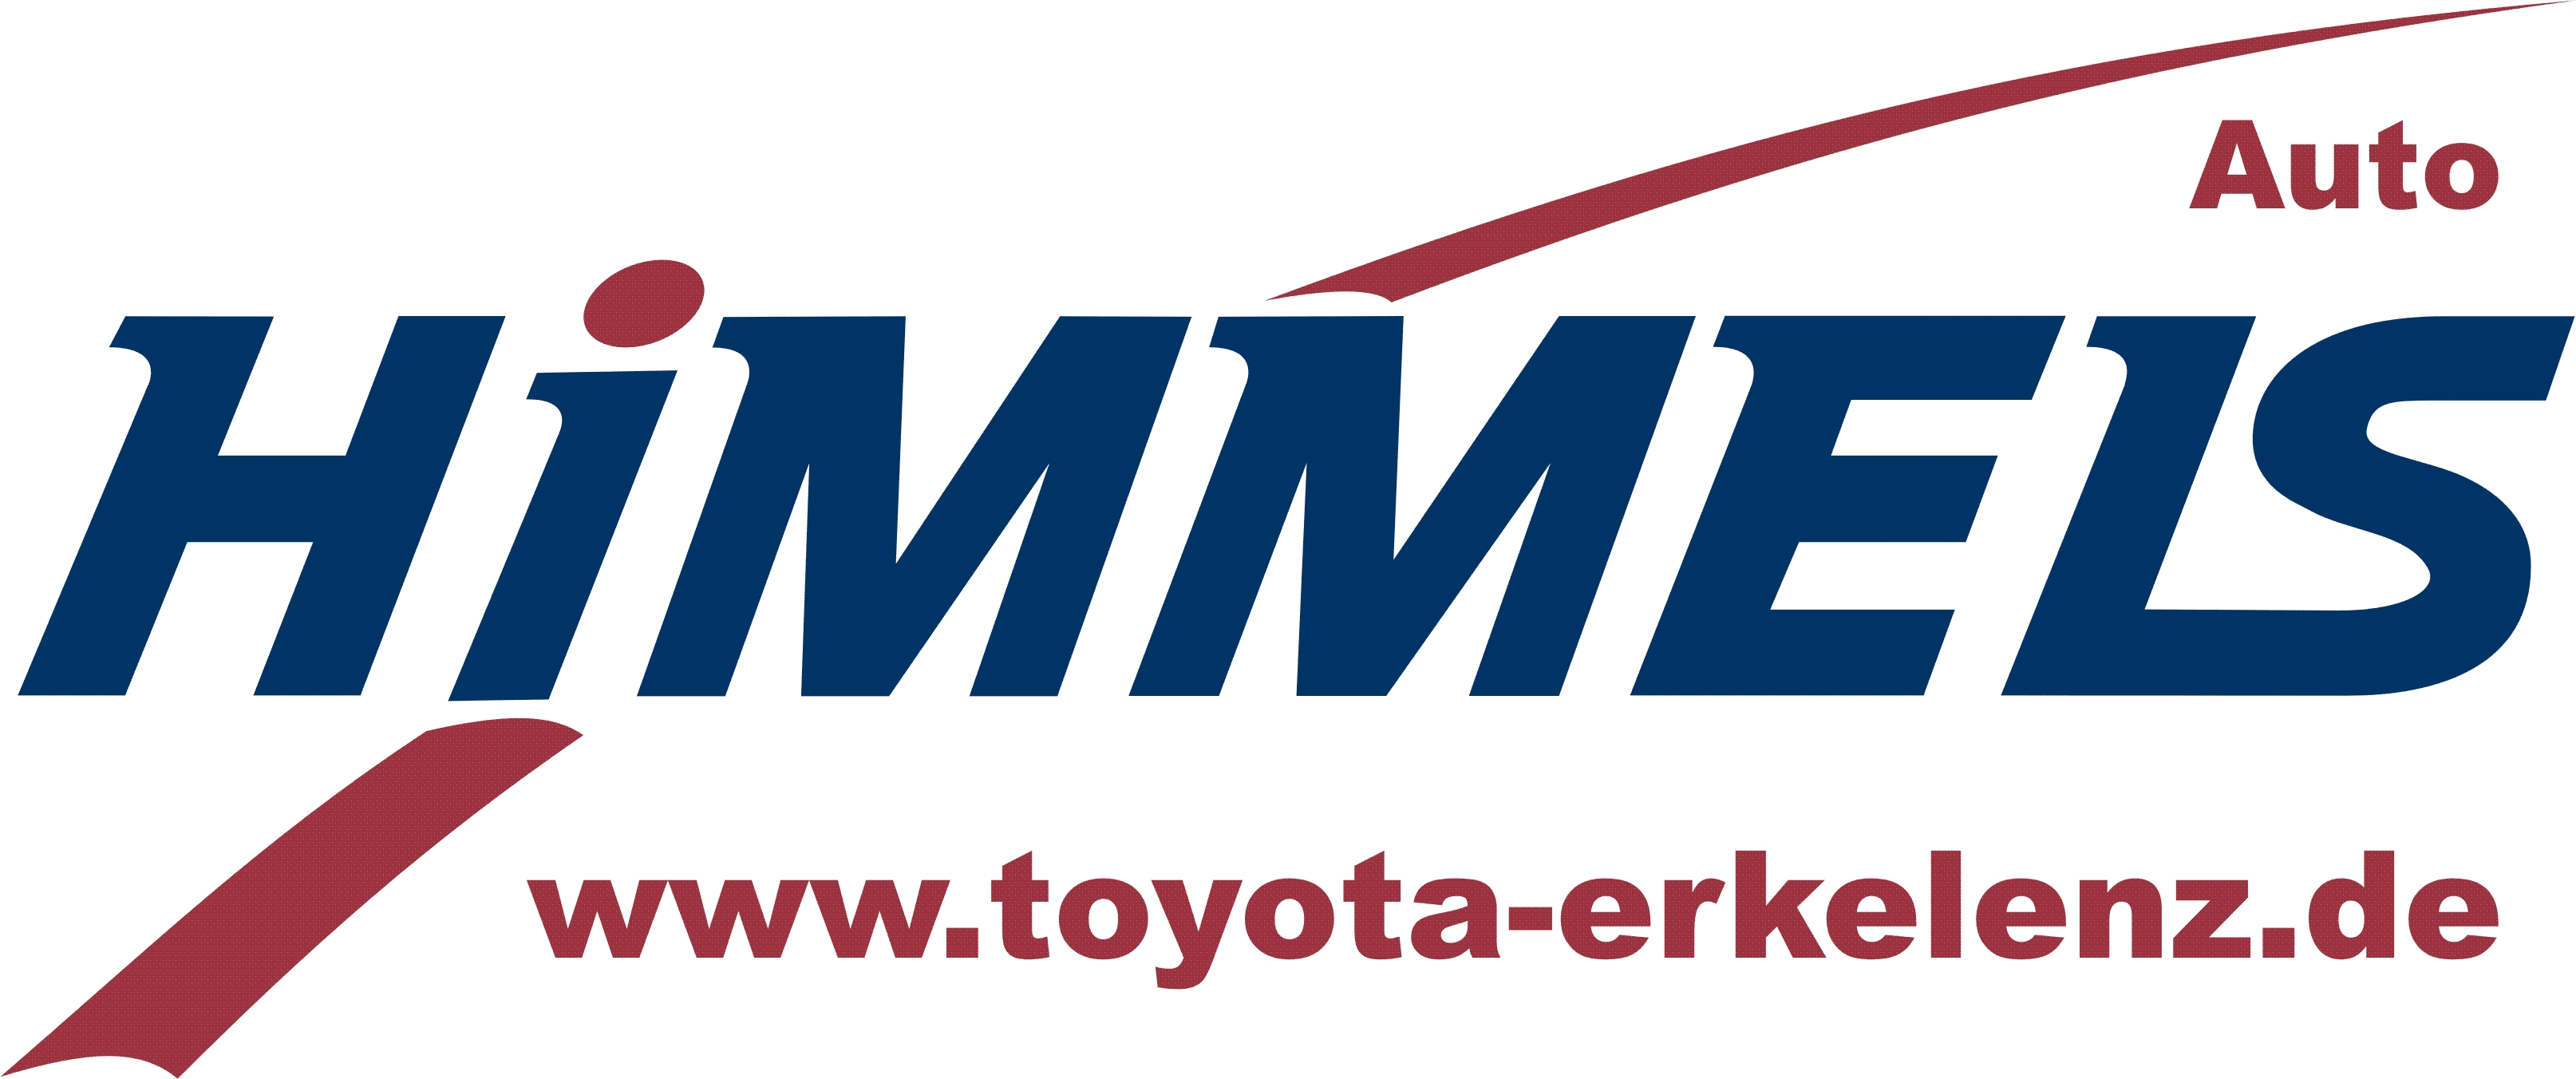 Auto Himmels GmbH logo